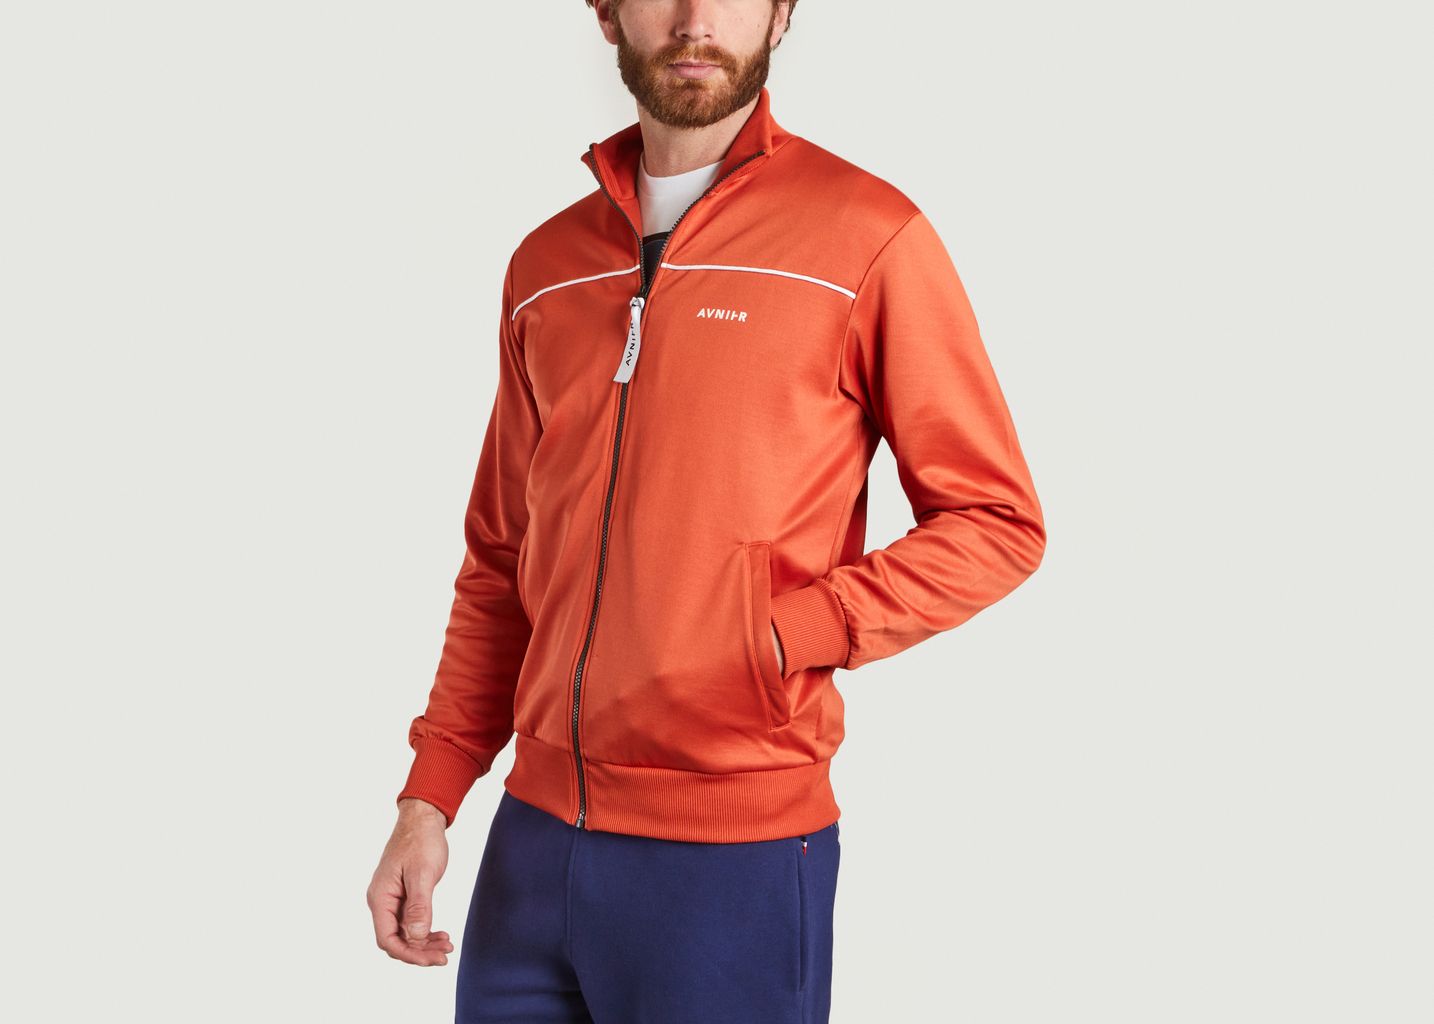 Tracktop Studio sport jacket - AVNIER